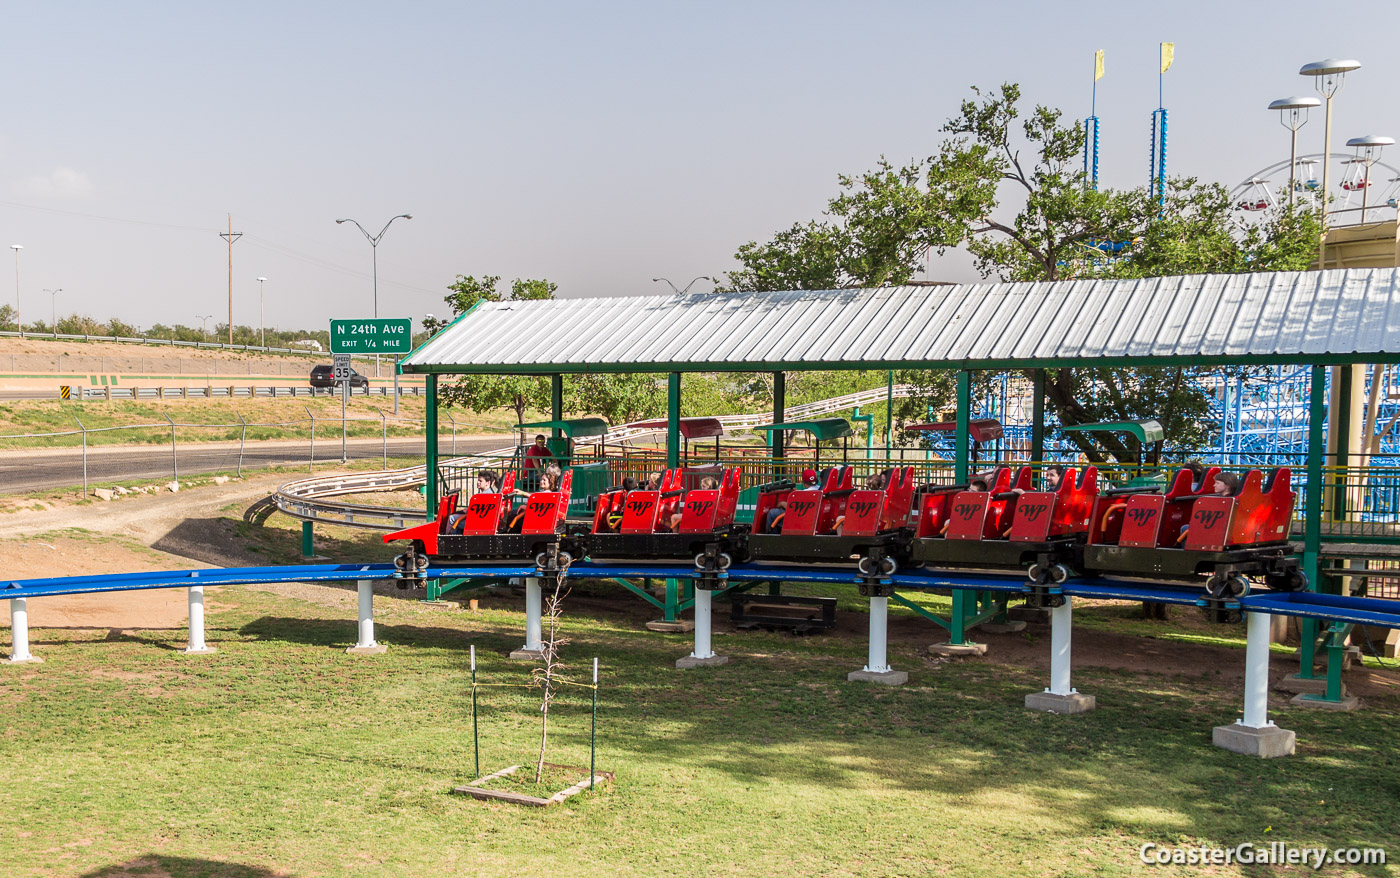 Train on the Texas Tornado looping roller coaster at Wonderland Park